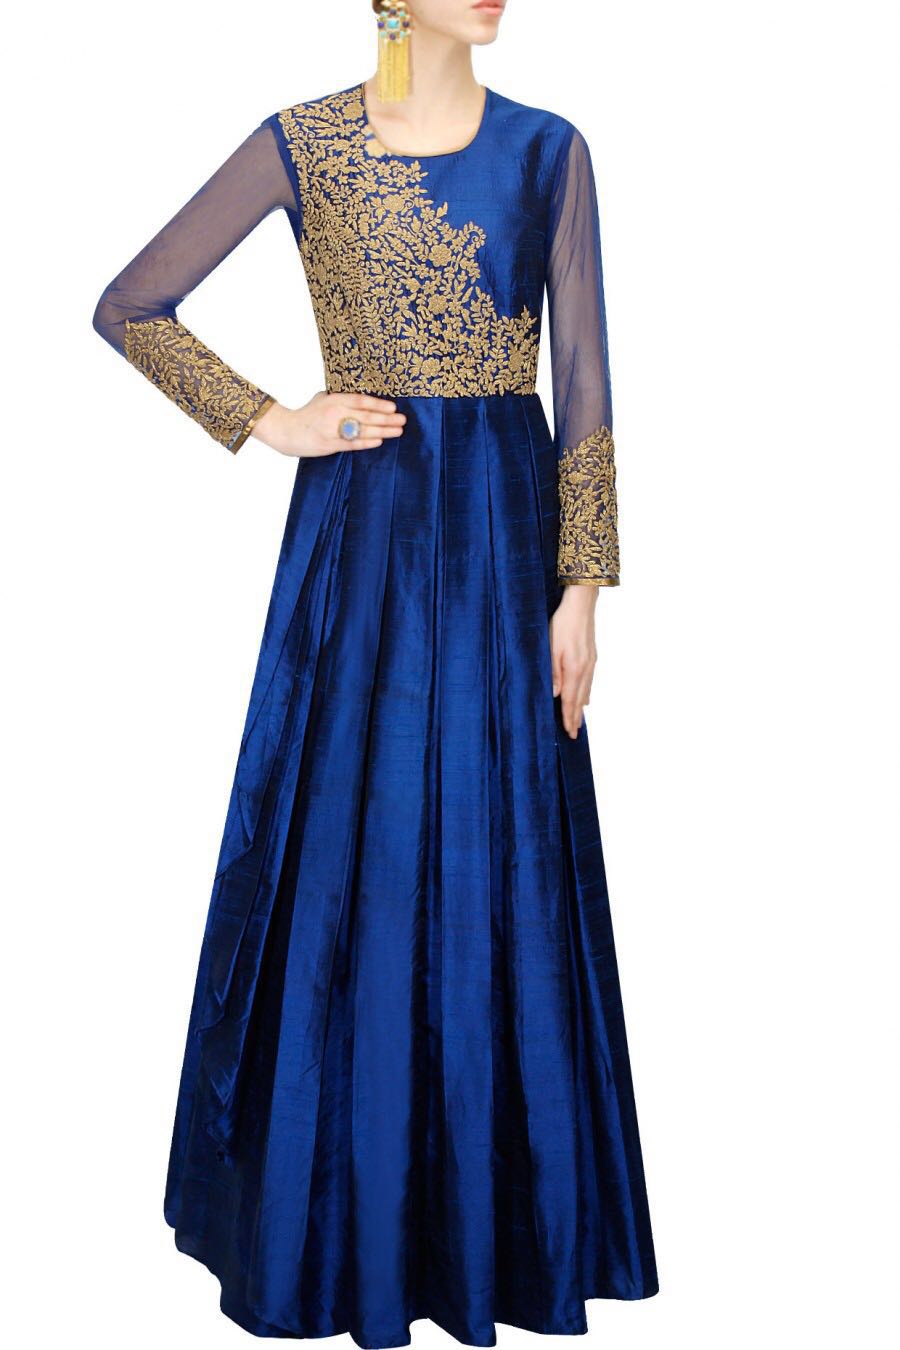 Buy Isha Enterprise Buy Fancy New Designer Blue Gown Online @ ₹1249 ...